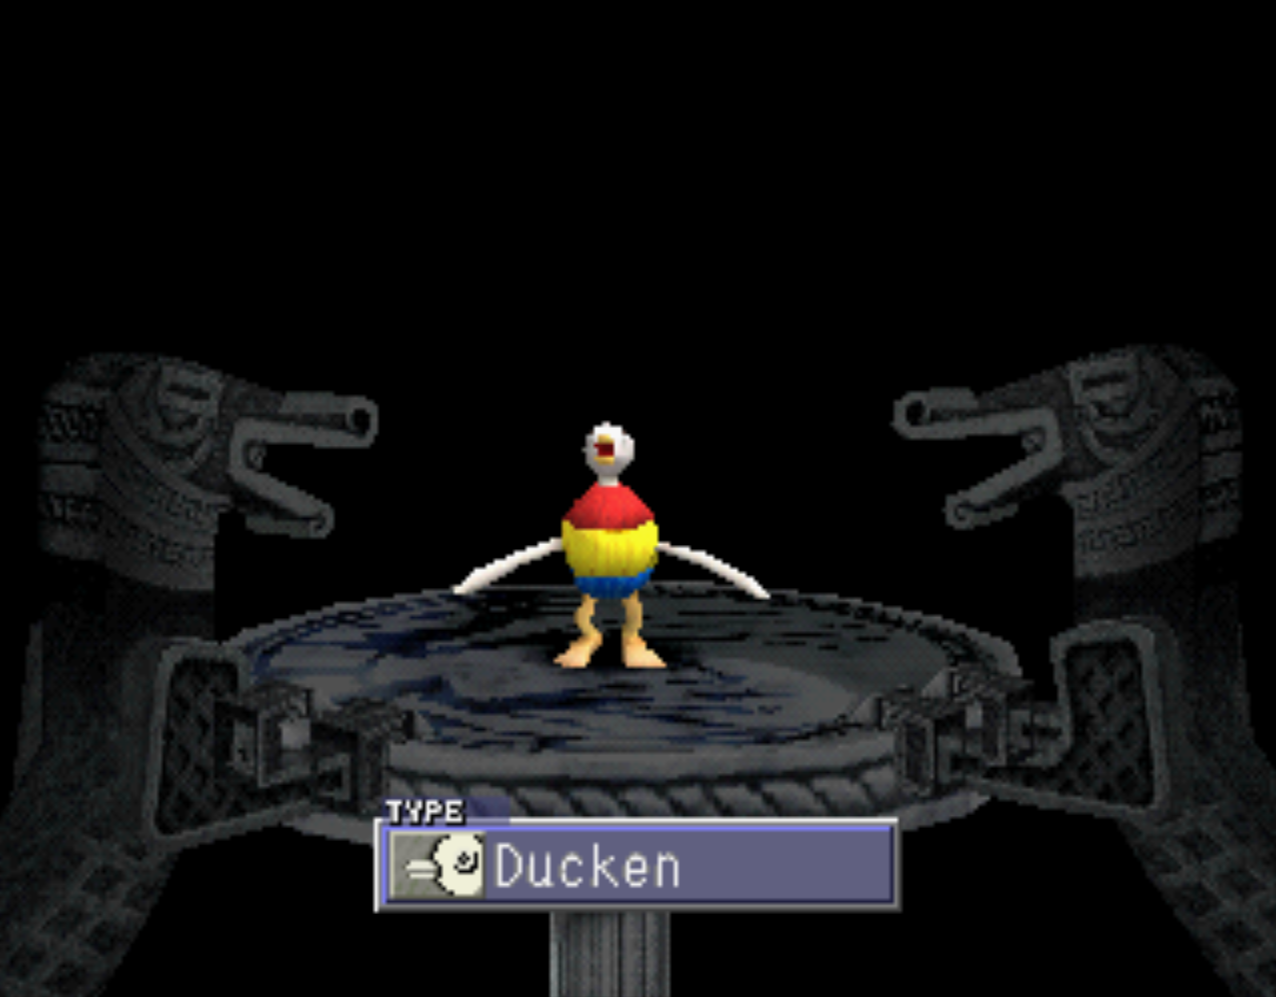 Ducken Monster Acquired